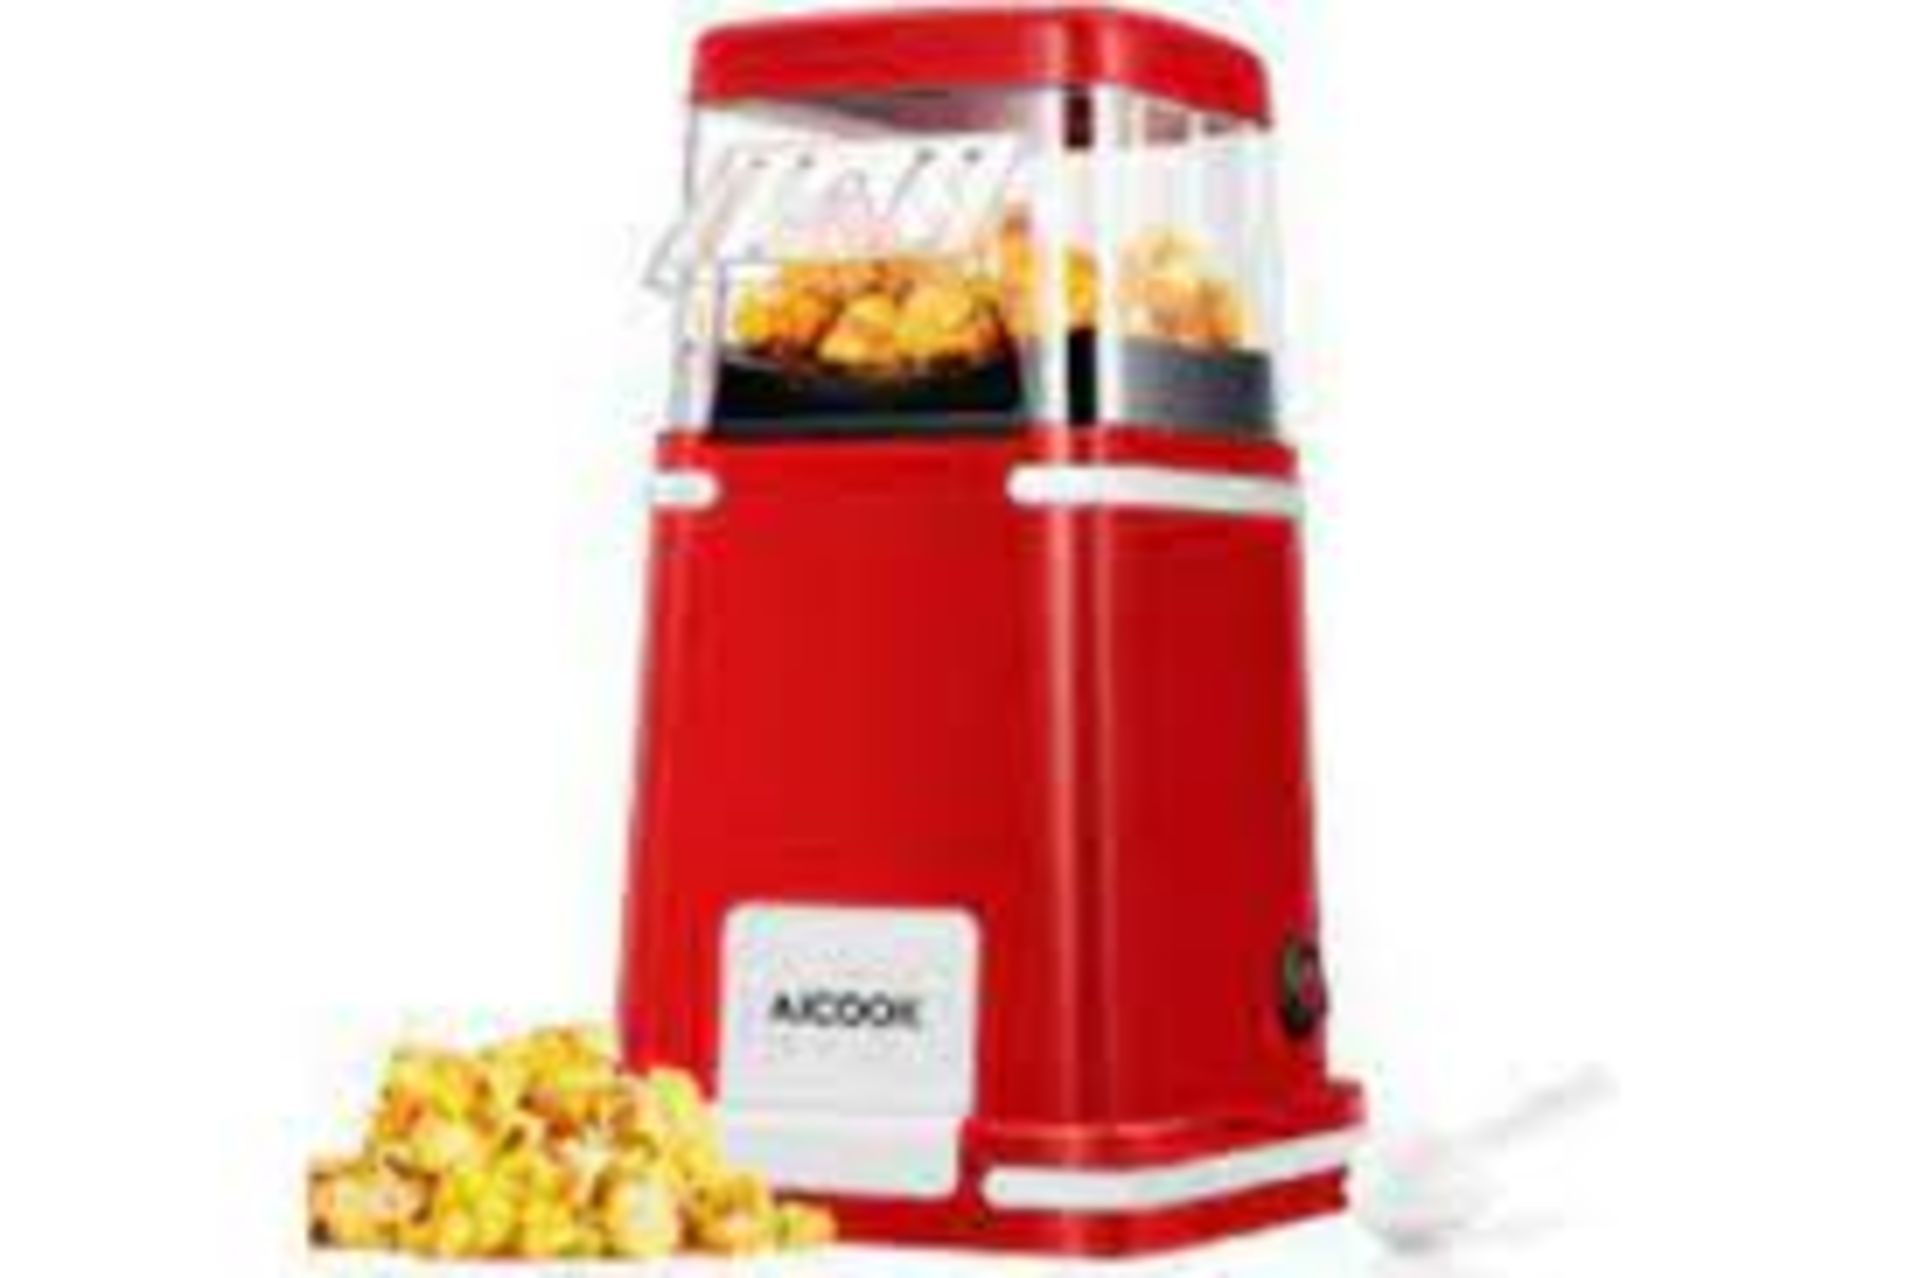 TRADE LOT 12 X NEW BOXED AICOOK Nostalgic Hot Air Popcorn Maker. (GPM-860-ROW4) ?HOT AIR SYSTEM&HIGH